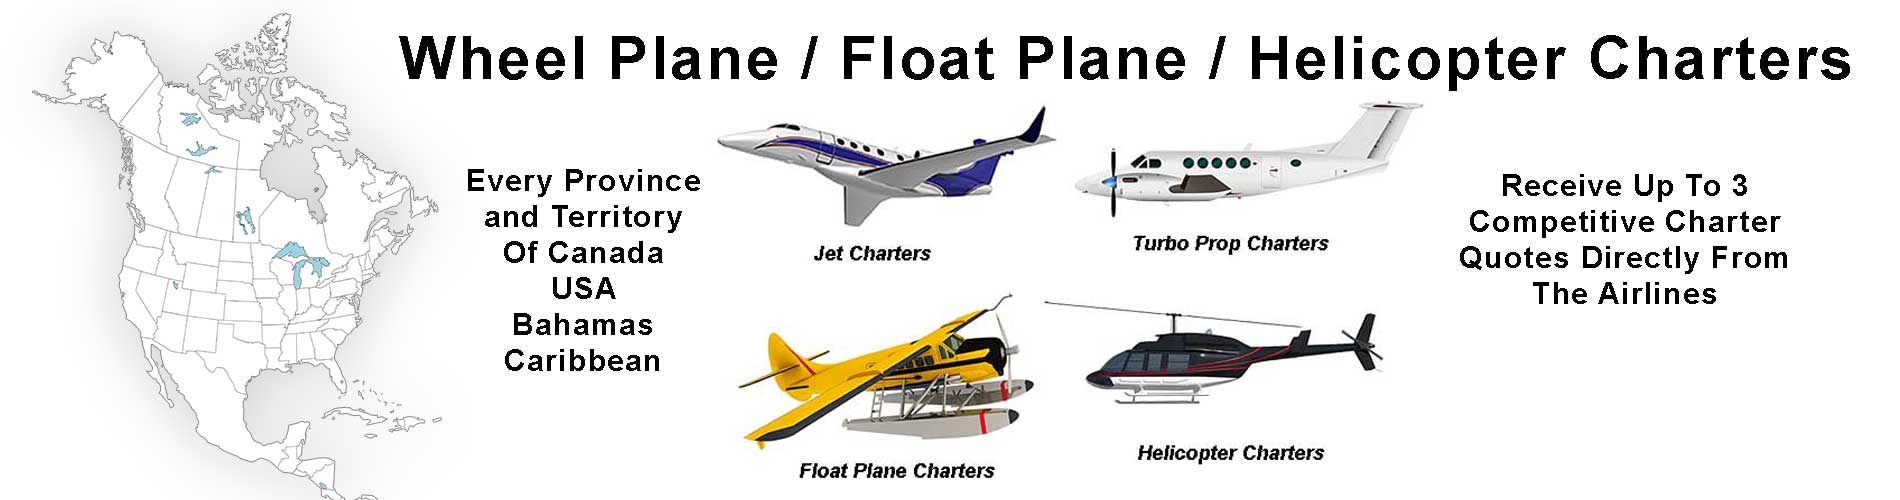 About Charter Flight Network